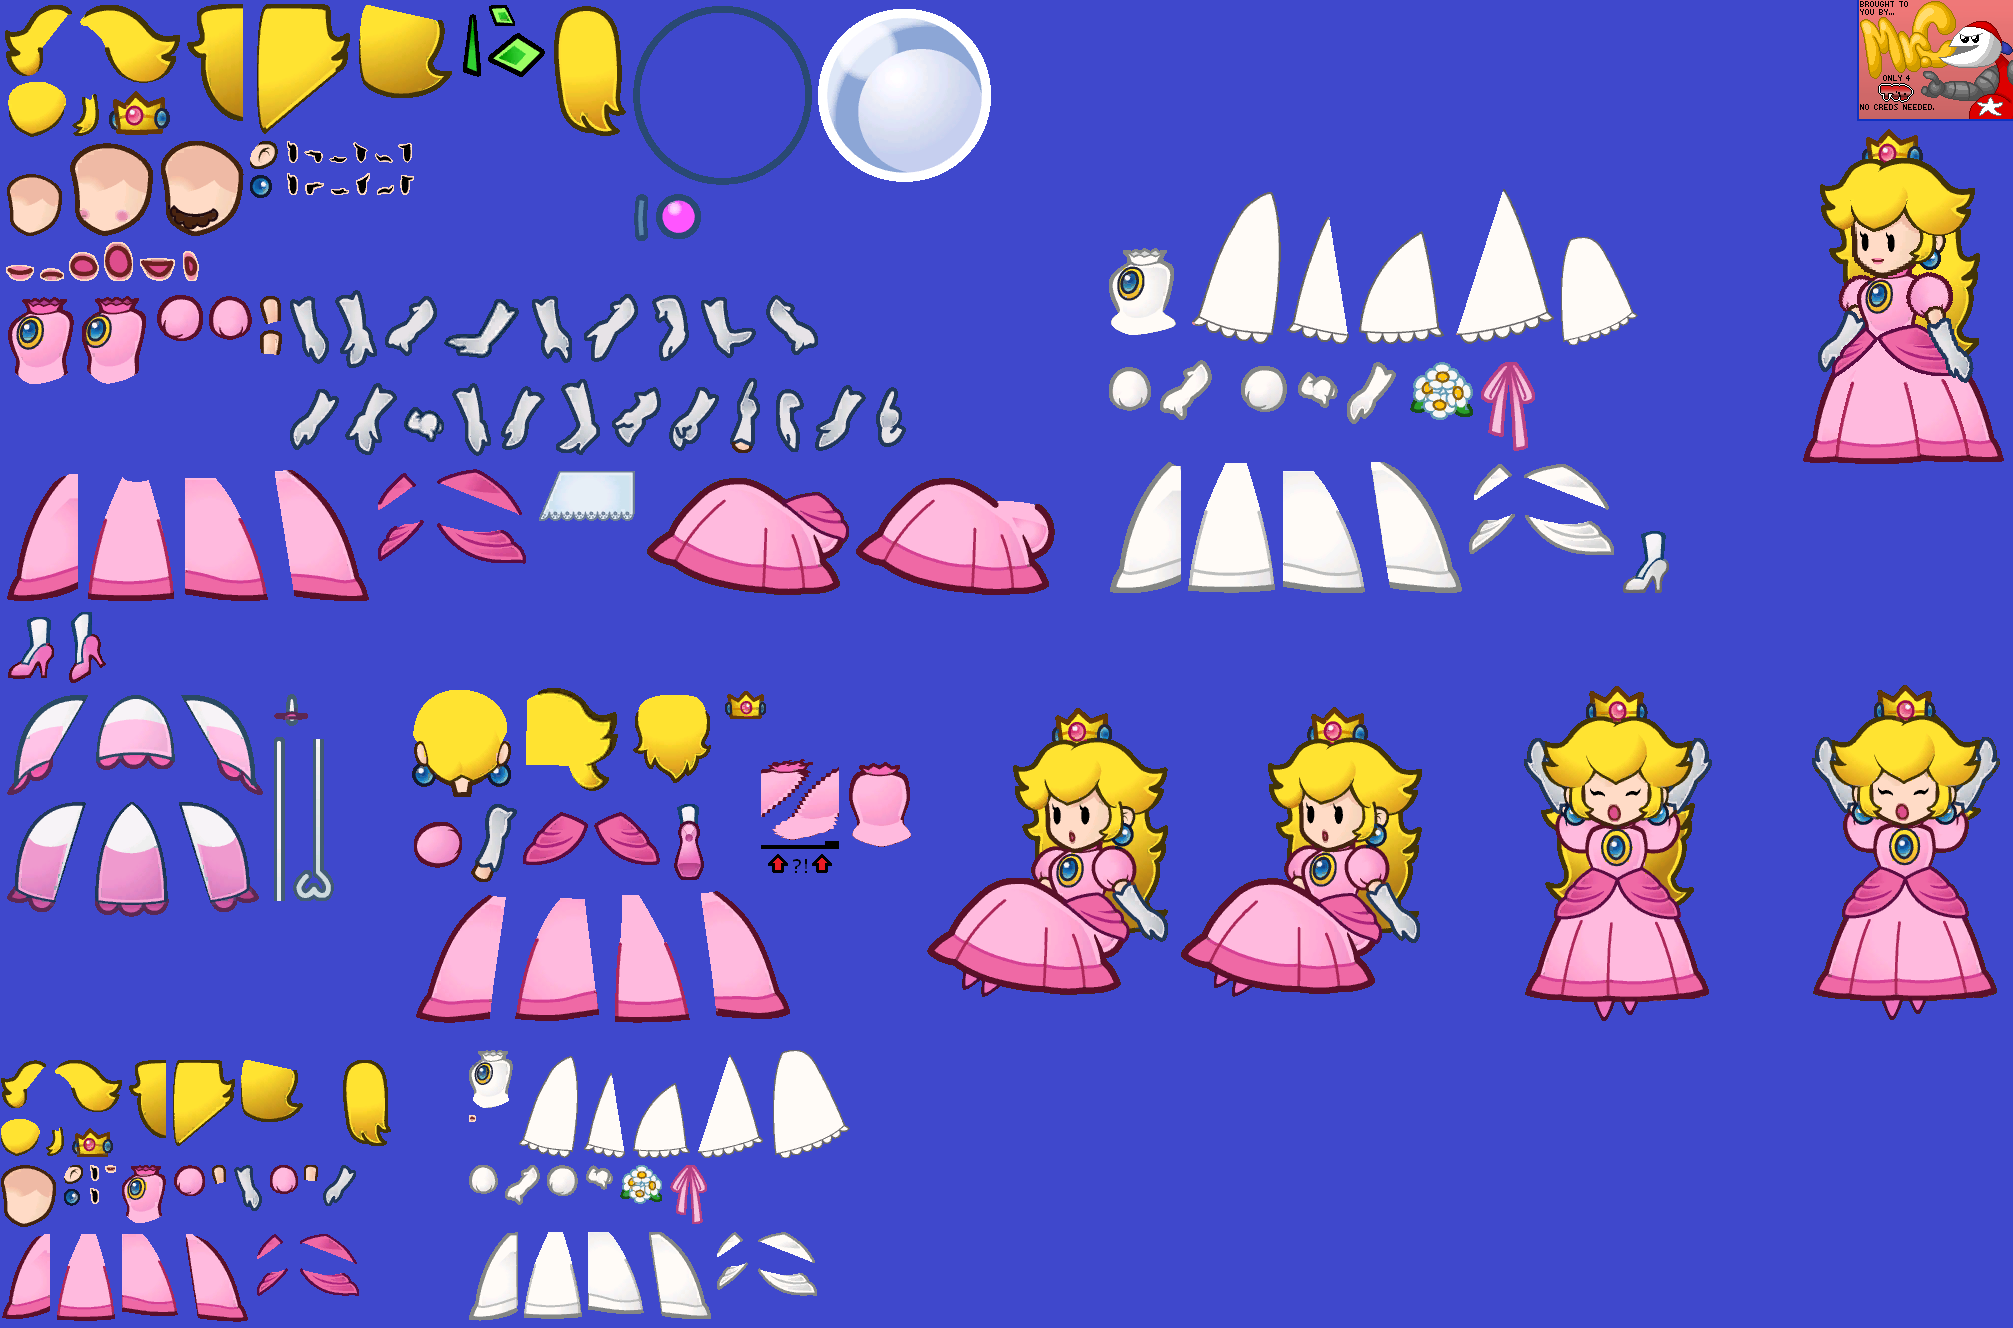 Super Paper Mario - Princess Peach